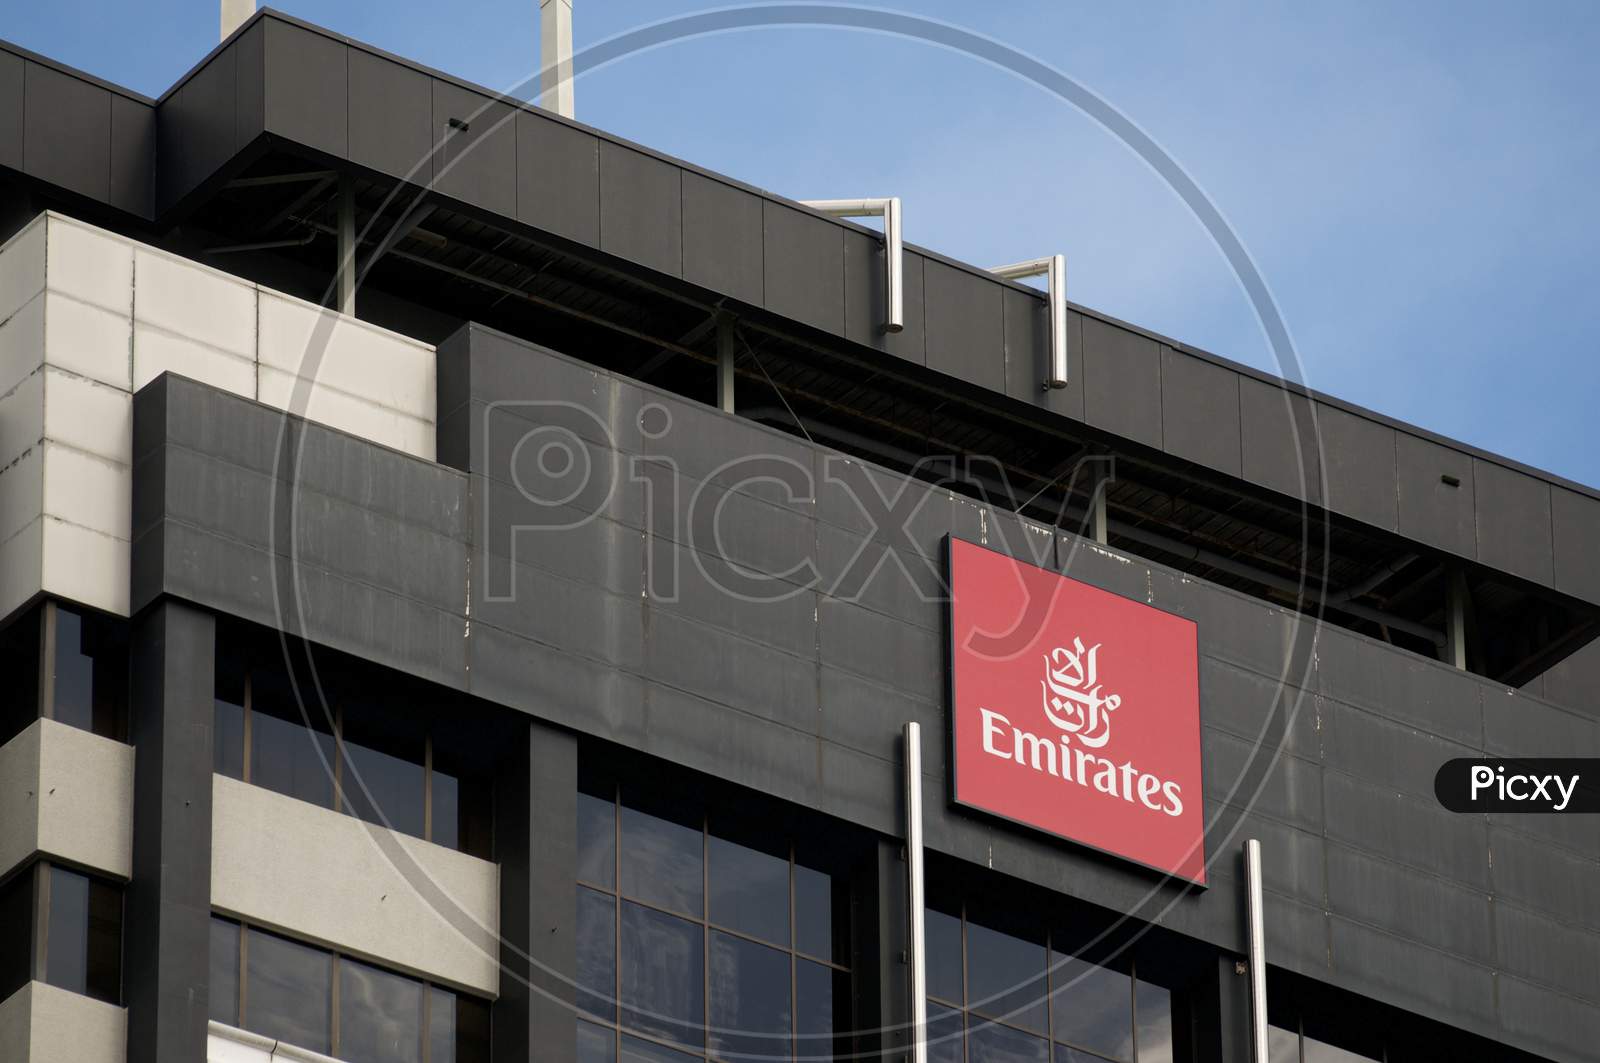 Emirates Logo On A Building In Brisbane